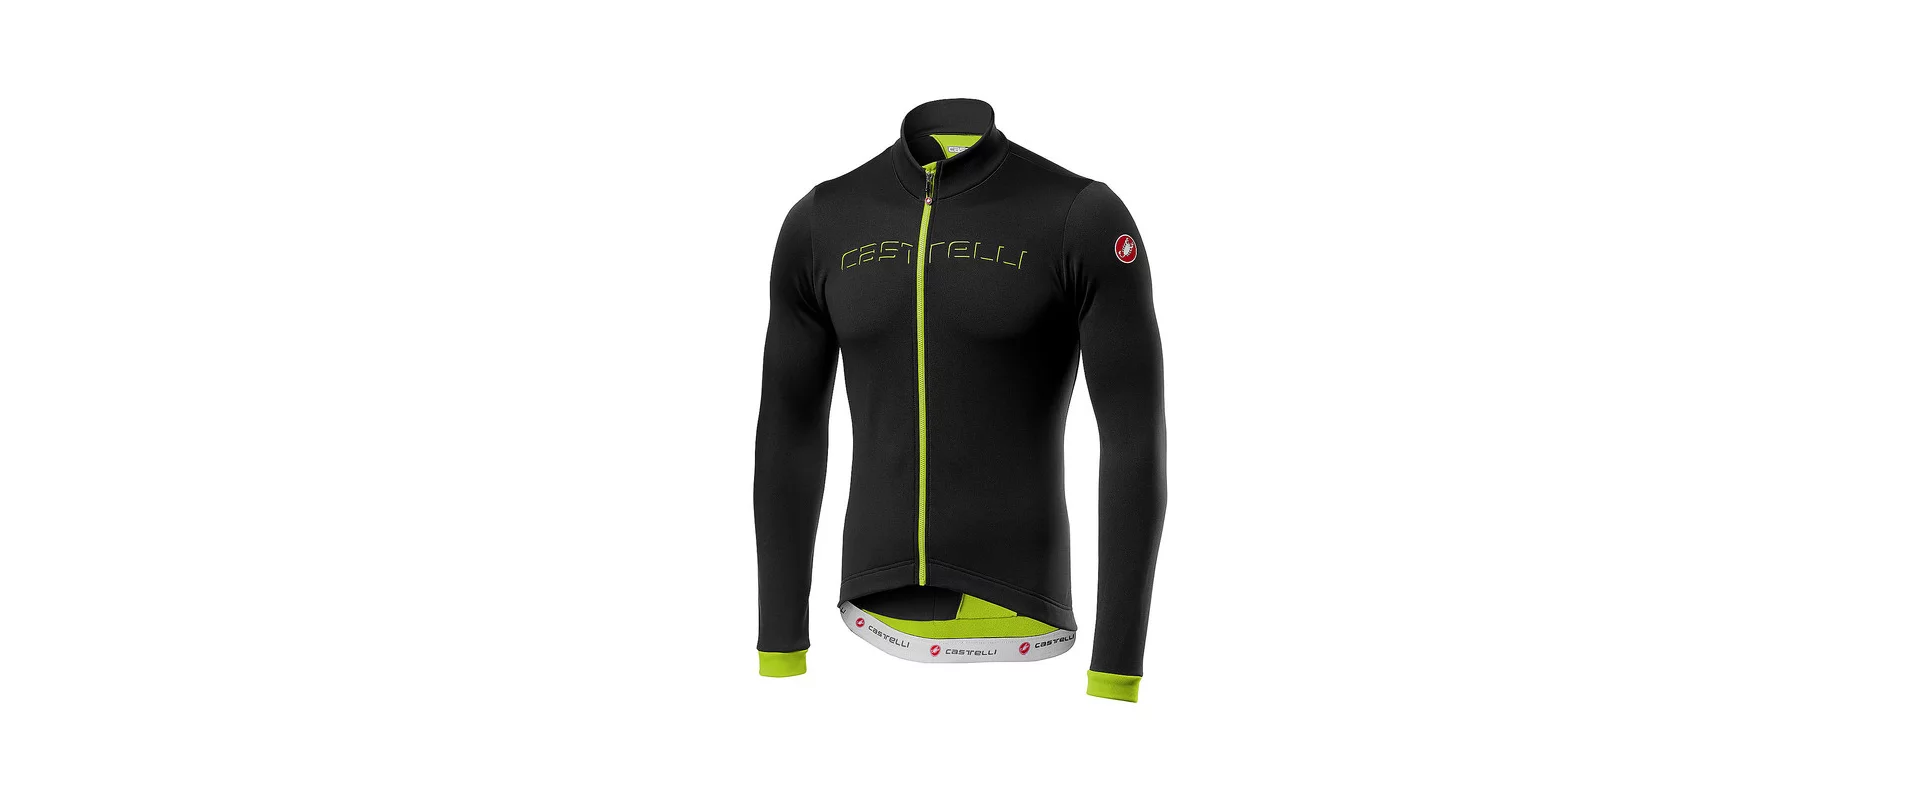 Castelli Fondo Jersey Fz / Мужская велокуртка